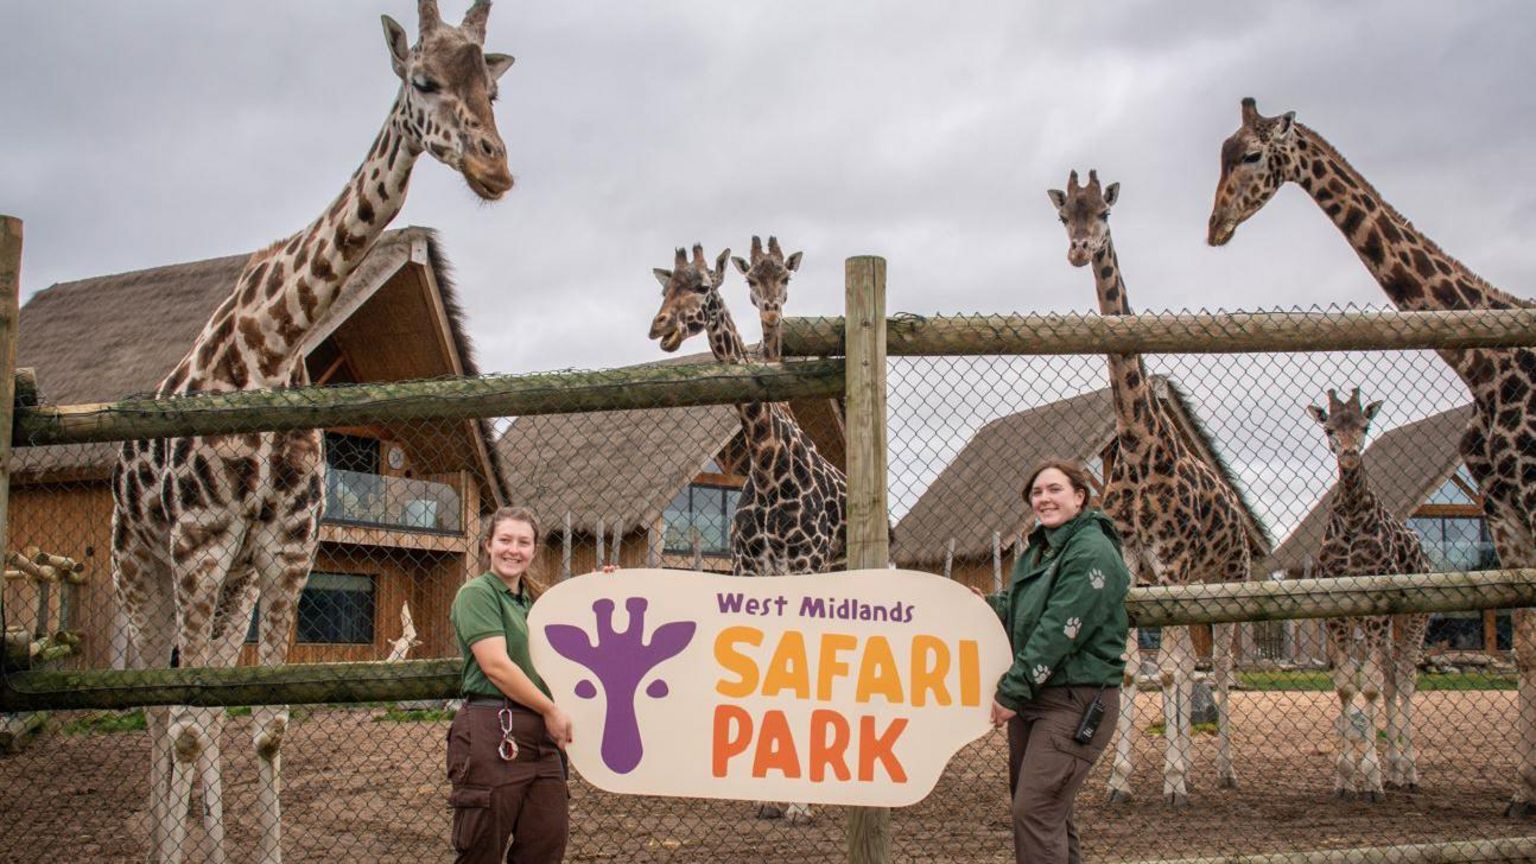 West Midland Safari Park's new logo